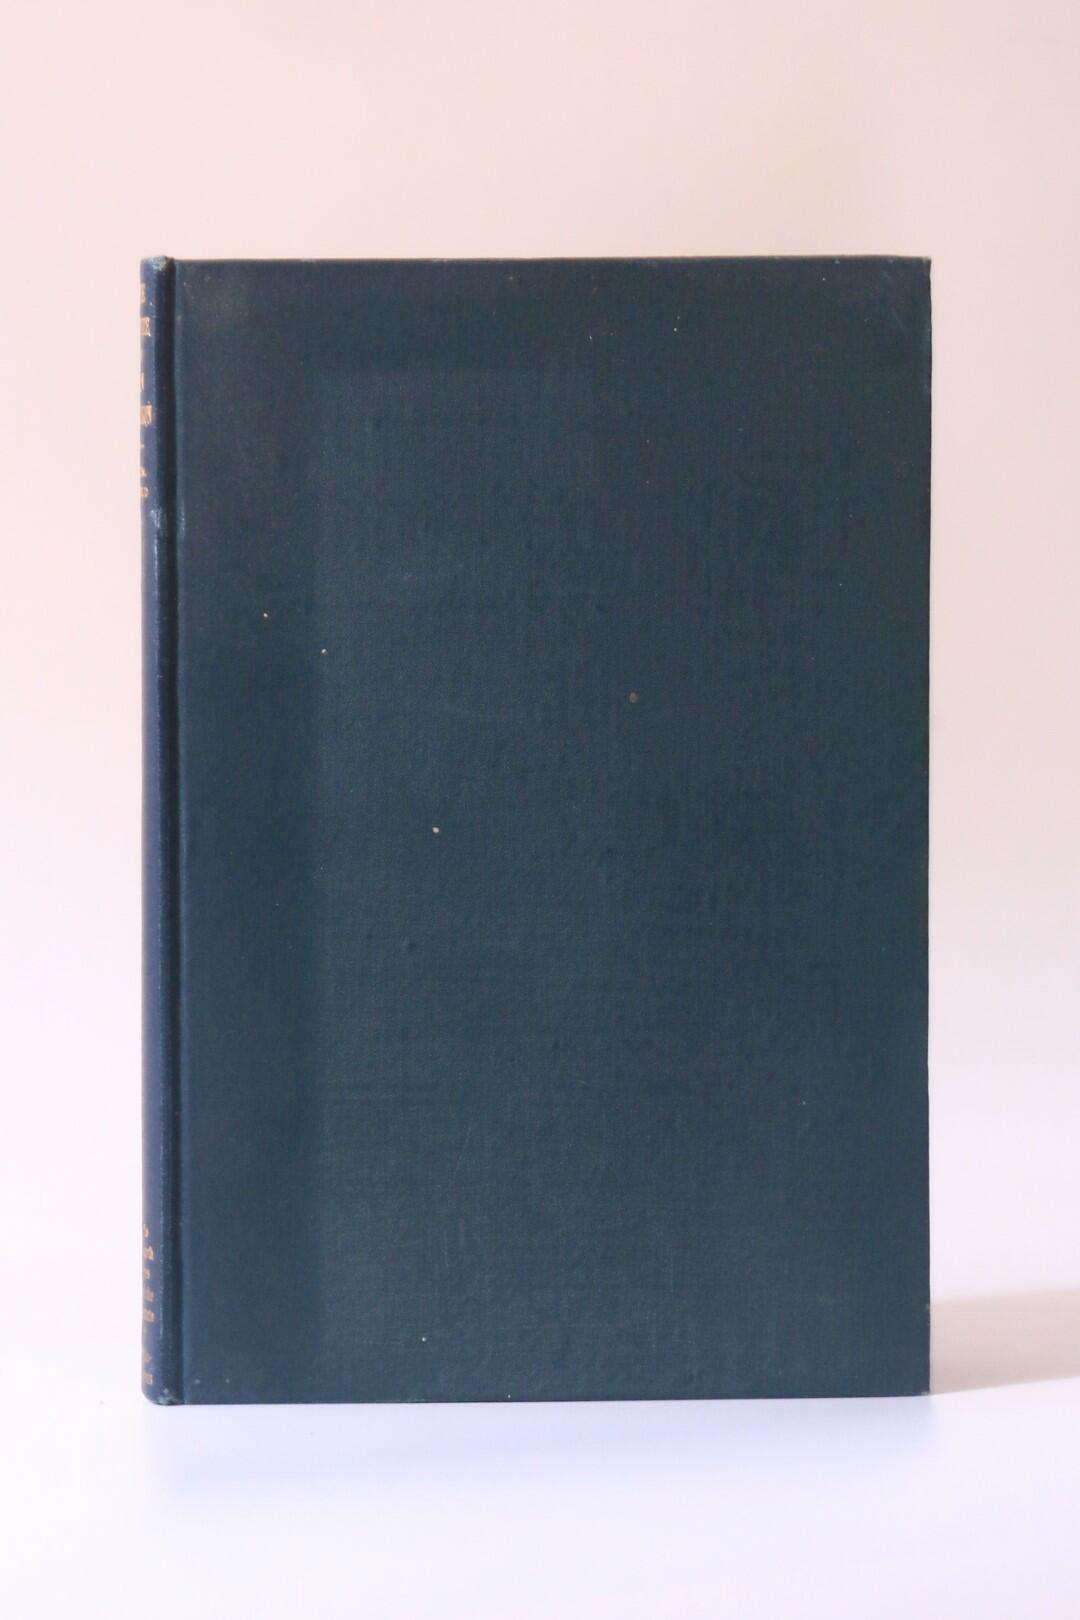 Sigmund Freud - The Future of an Illusion - Olaf Stapledon's Copy - Hogarth Press, 1928, First Edition.